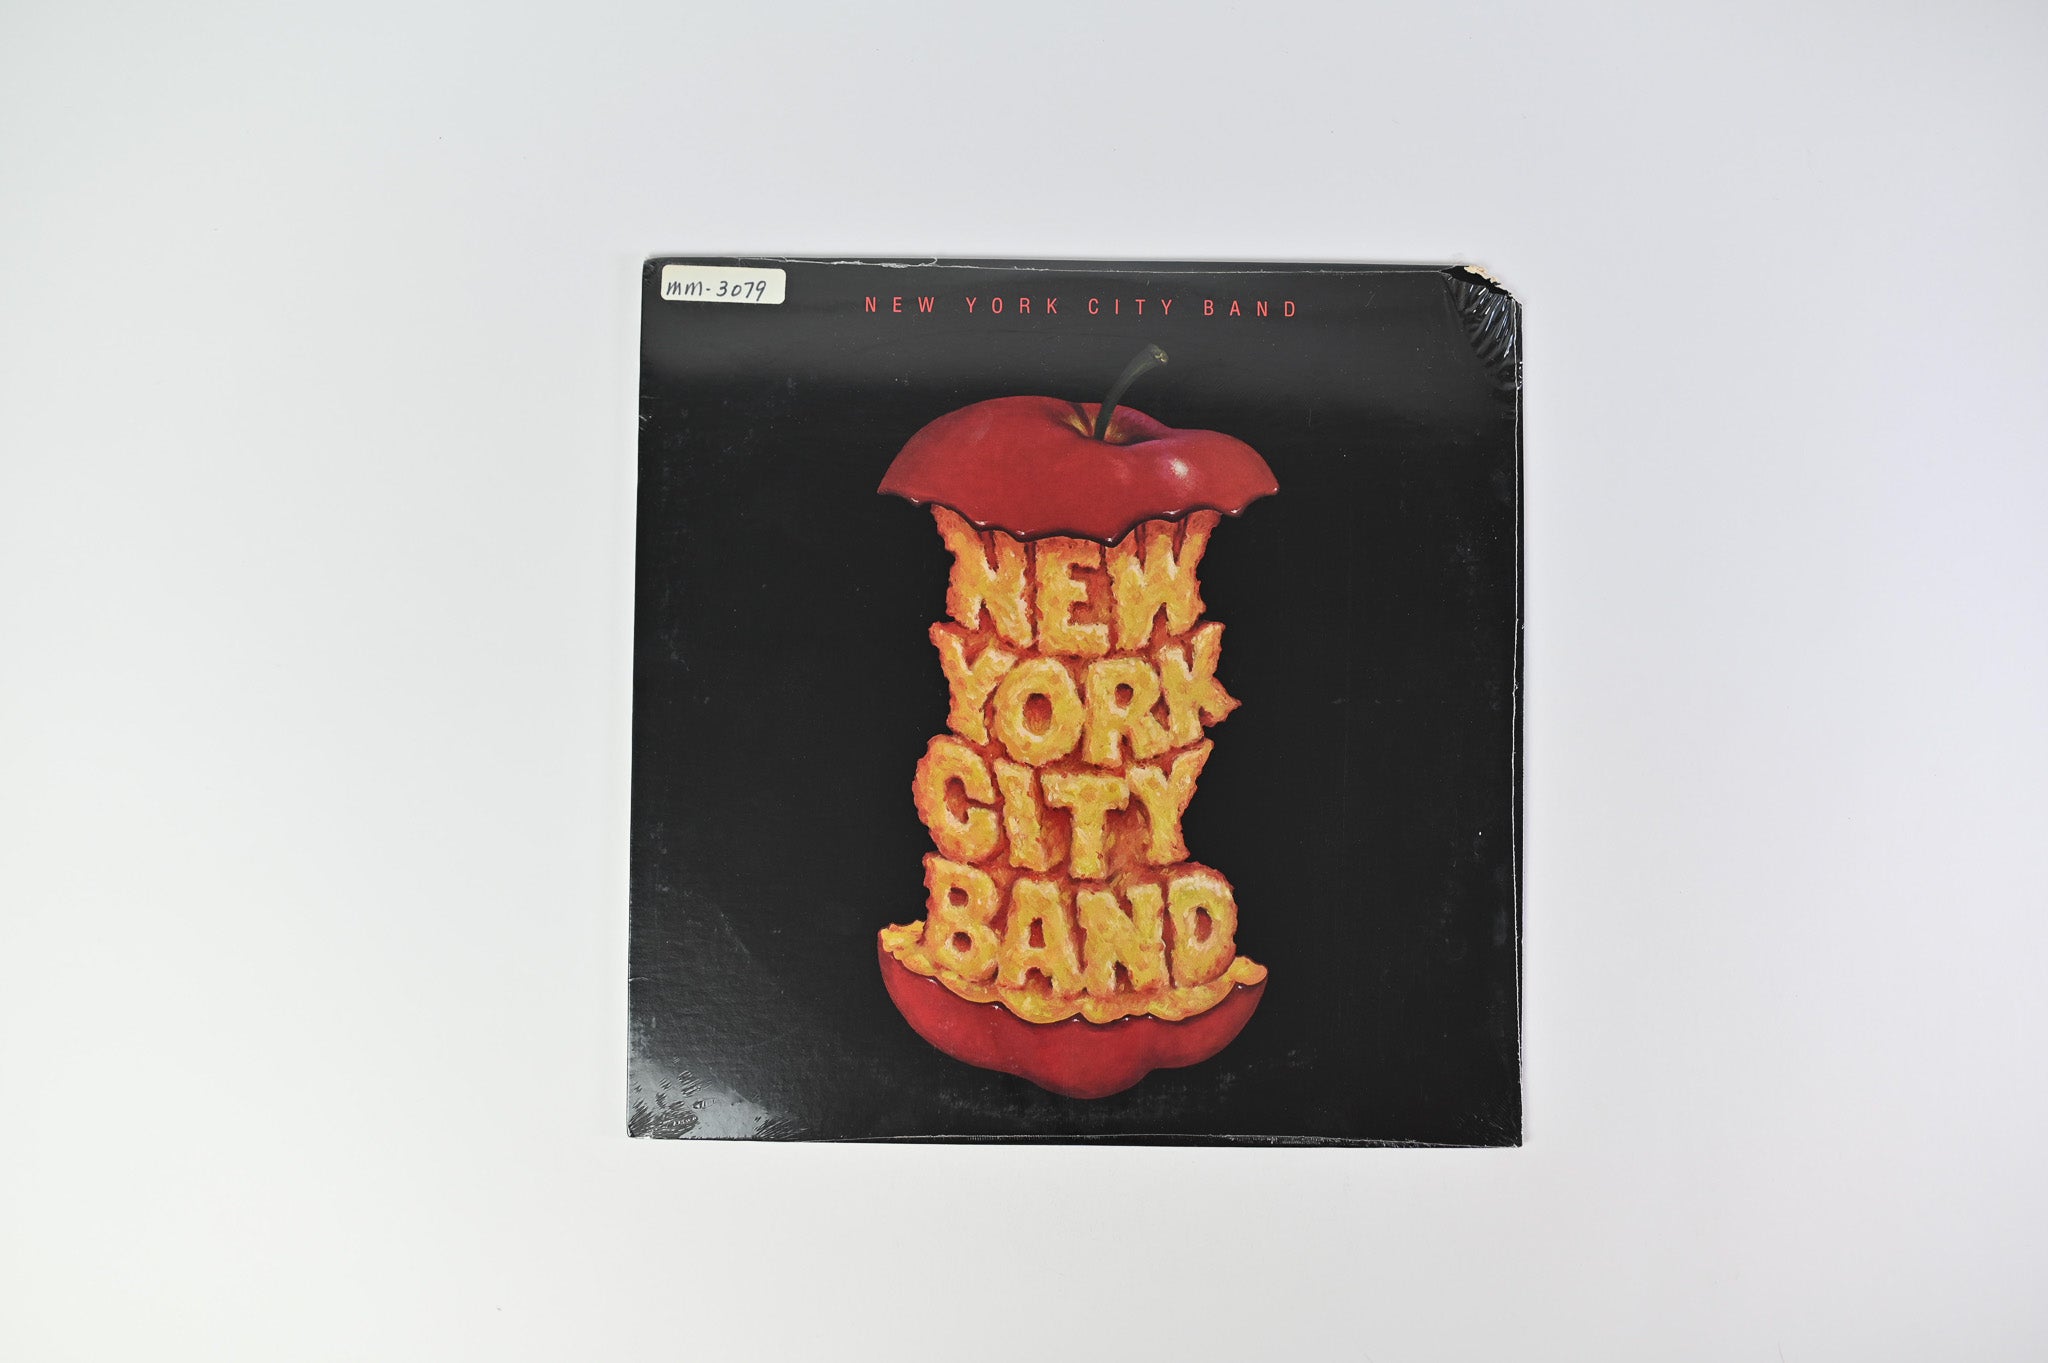 New York City Band - New York City Band on American International Sealed